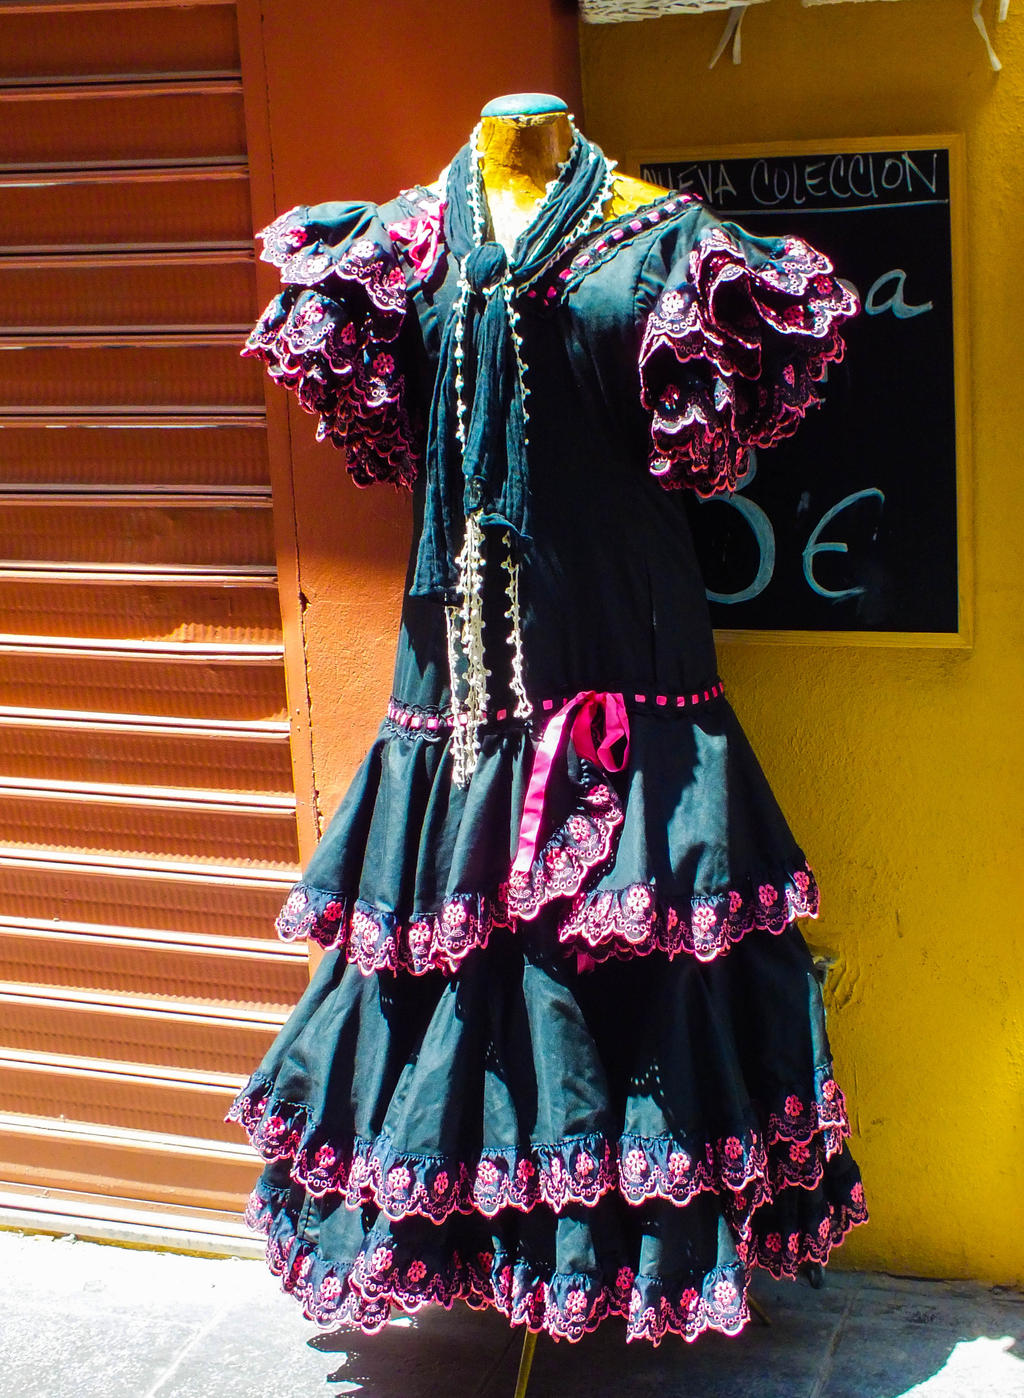 Valencia 53 - Old Spanish Dress by HermitCrabStock on DeviantArt